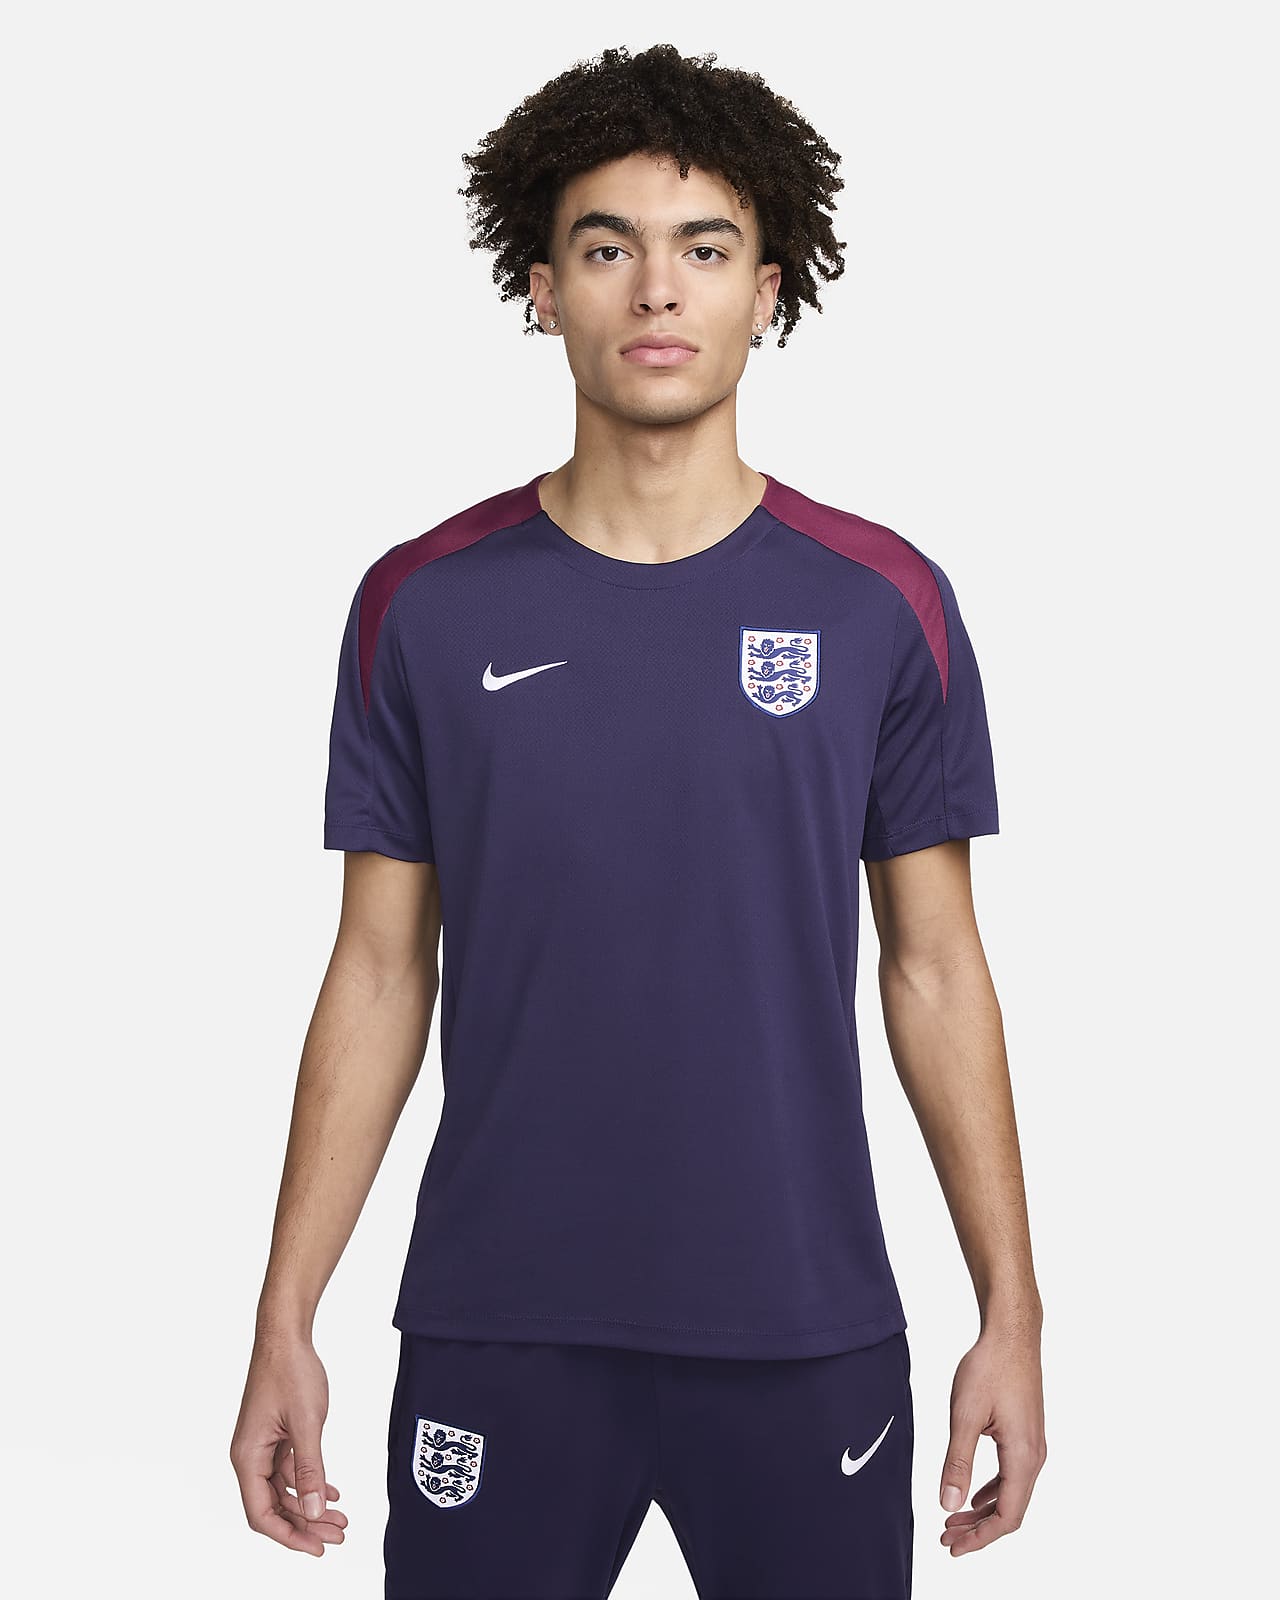 England Strike Men's Nike Dri-FIT Soccer Short-Sleeve Knit Top